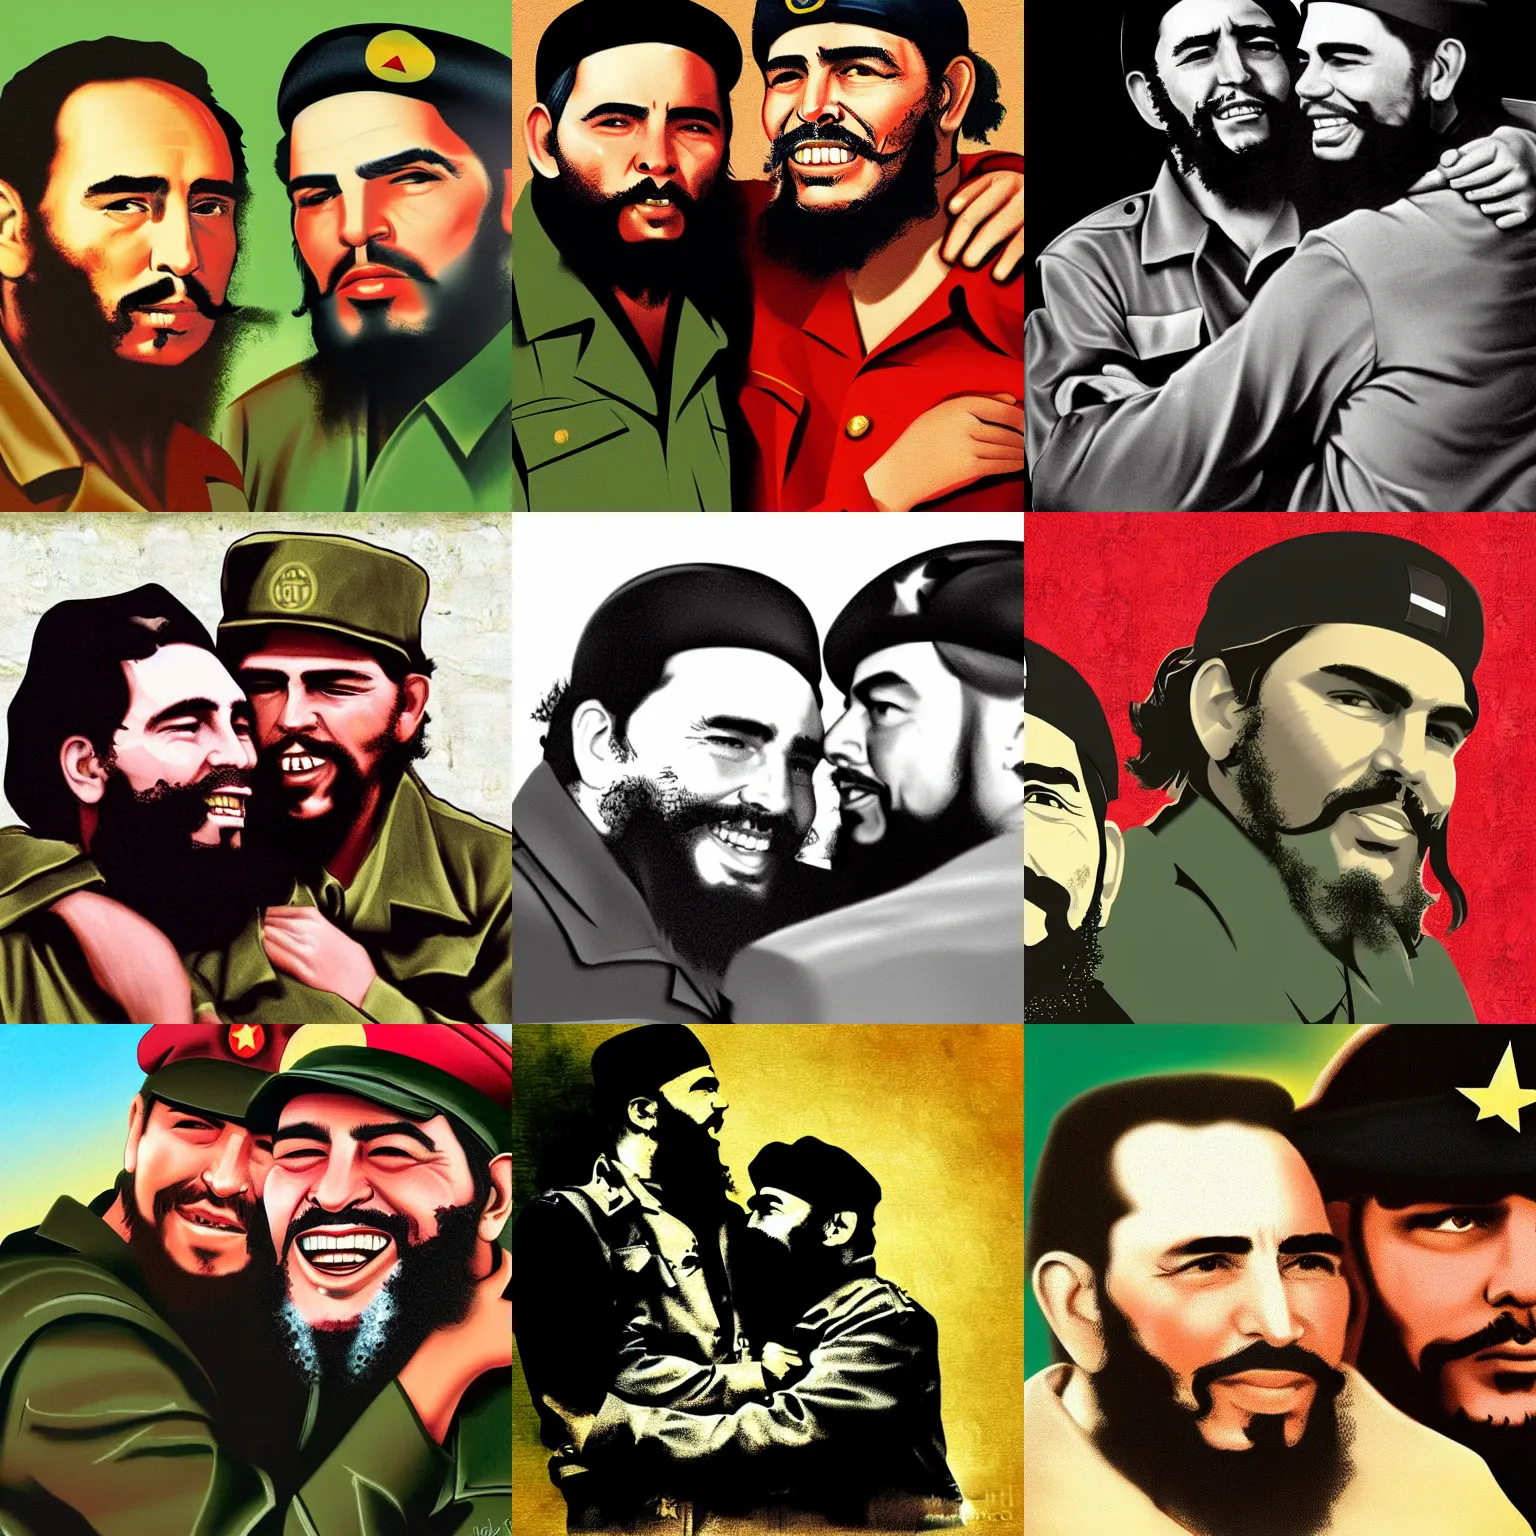 Prompt: fidel castro and che Guevara hugging in heaven, digital art